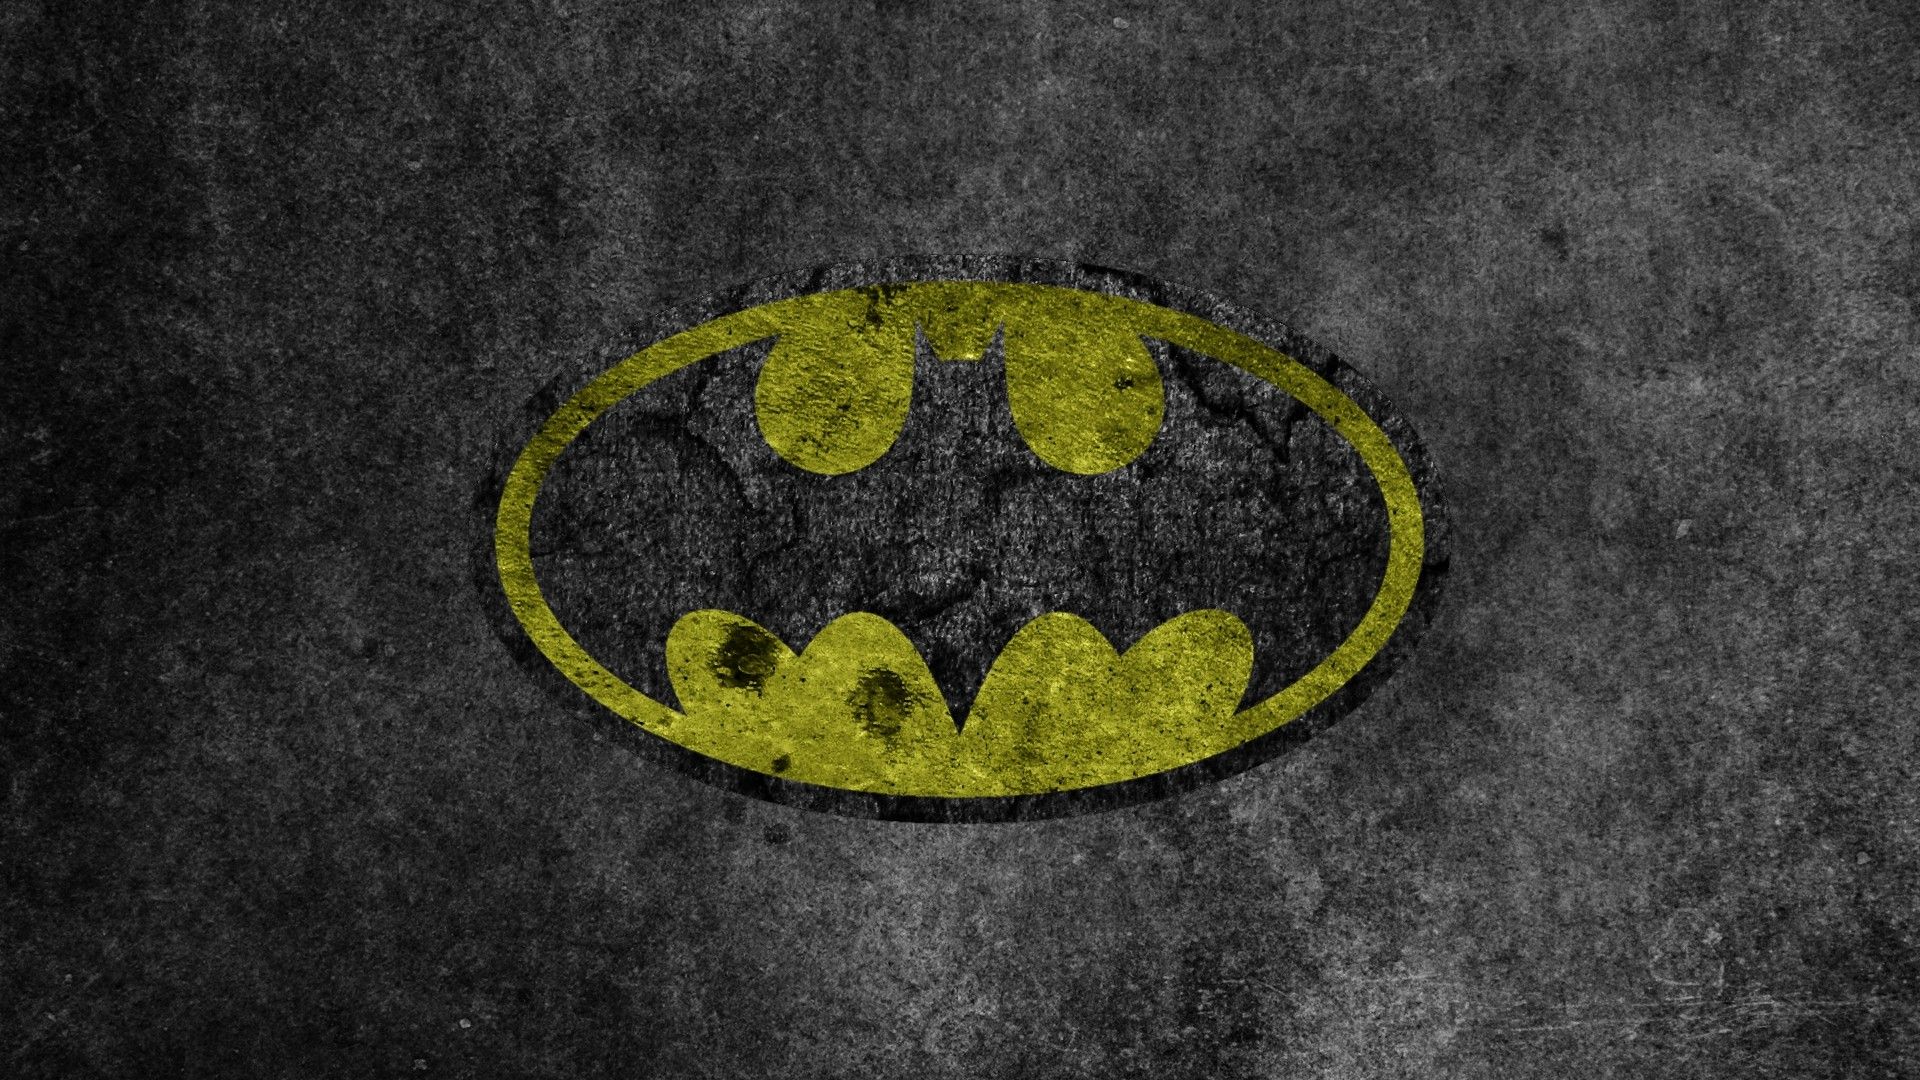 Batman Hd Wallpapers | Free HD Desktop Wallpapers - Widescreen Images